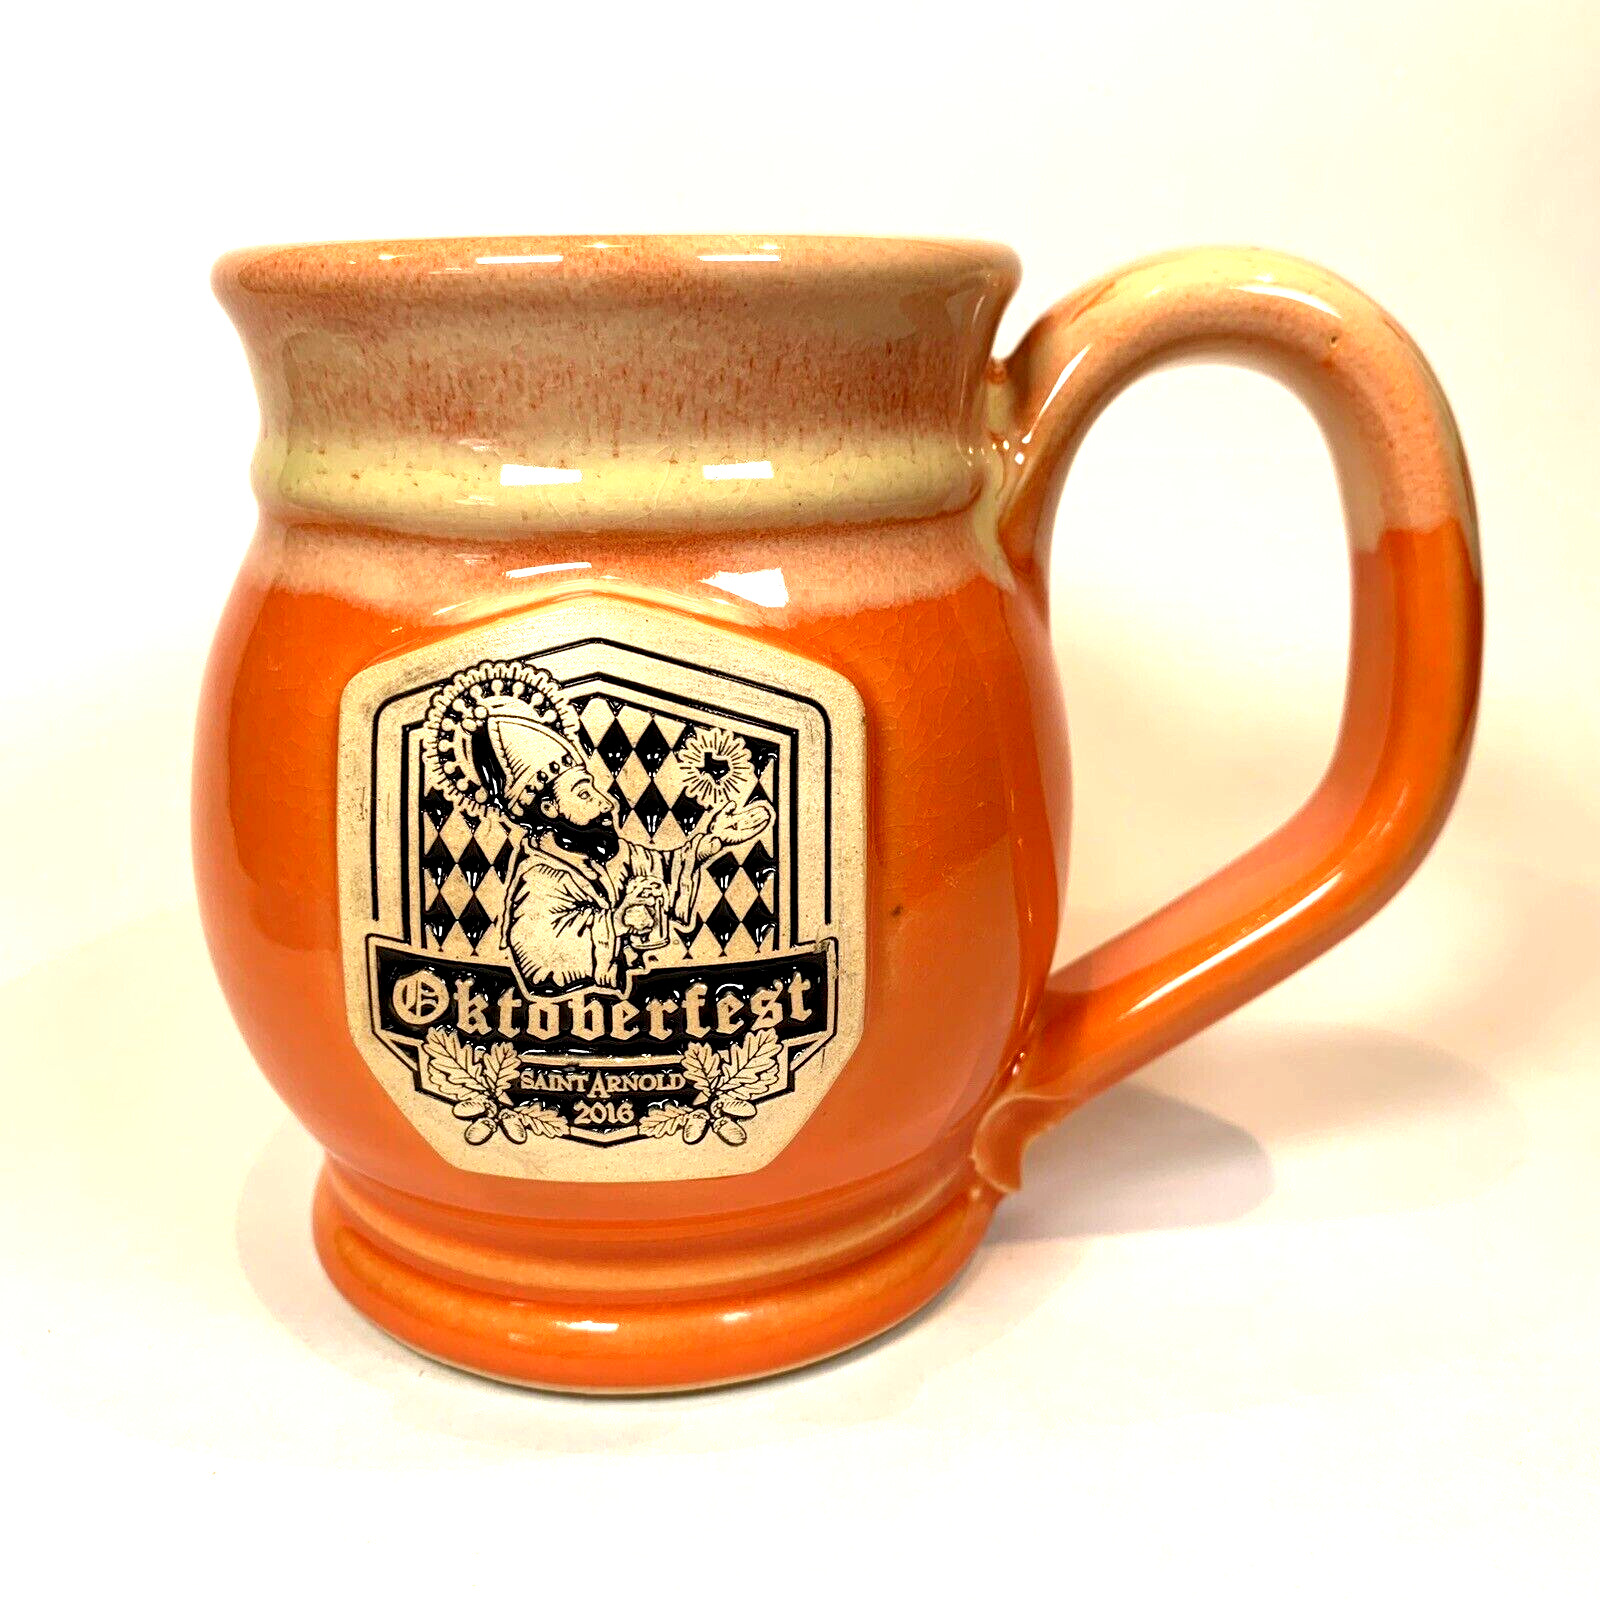 2016 - St. Arnold Brewery Oktoberfest Event Ceramic Pottery Mug Stein Beer Cup